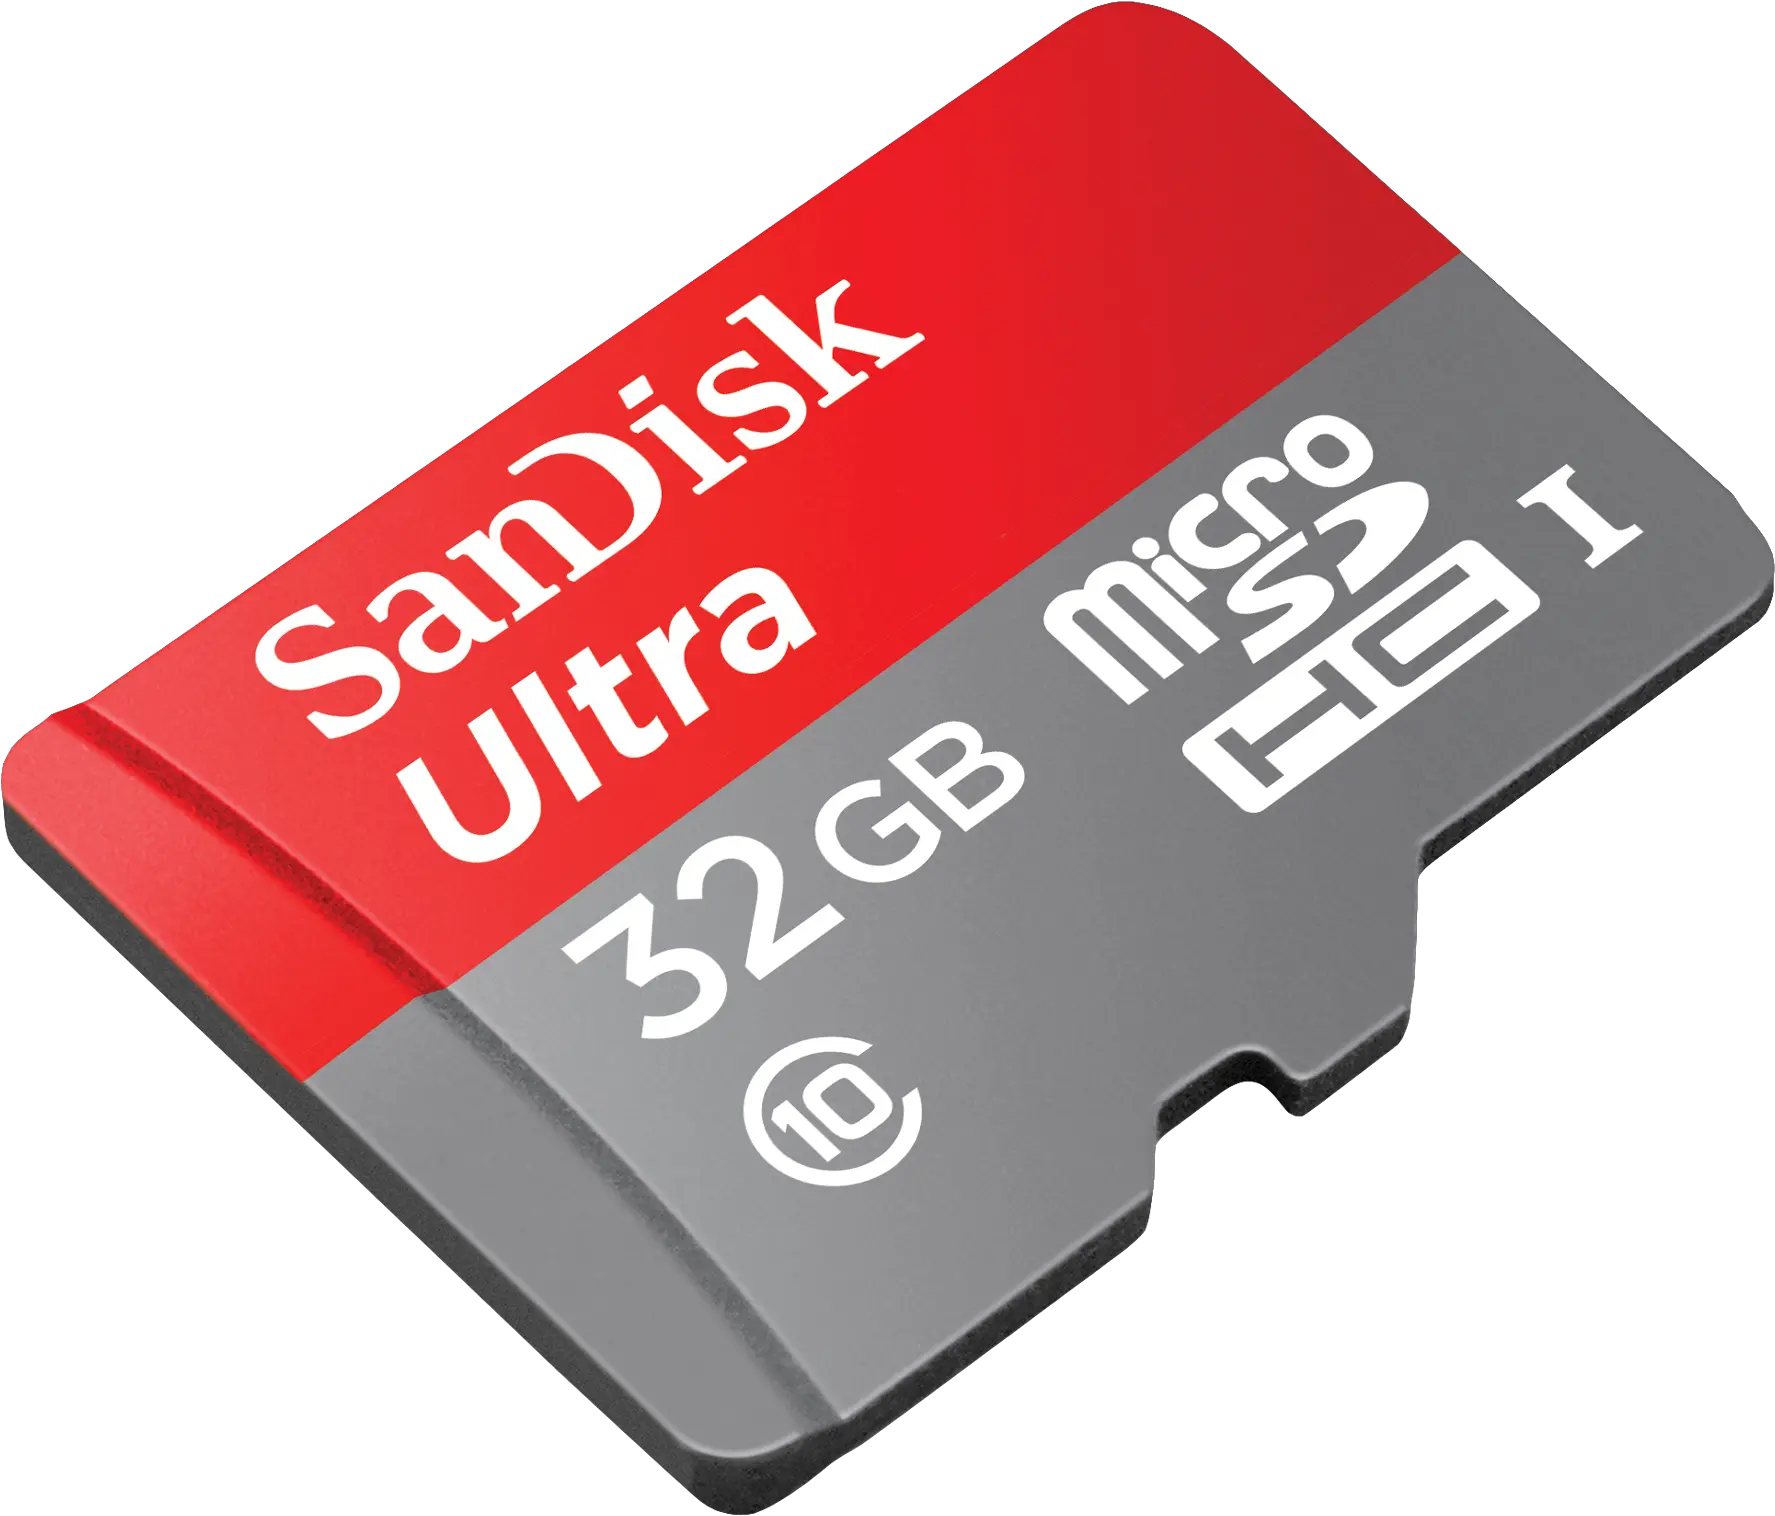 Download Sandisk Memory Card Png Image Micro Sd 32gb Sandisk Card Png